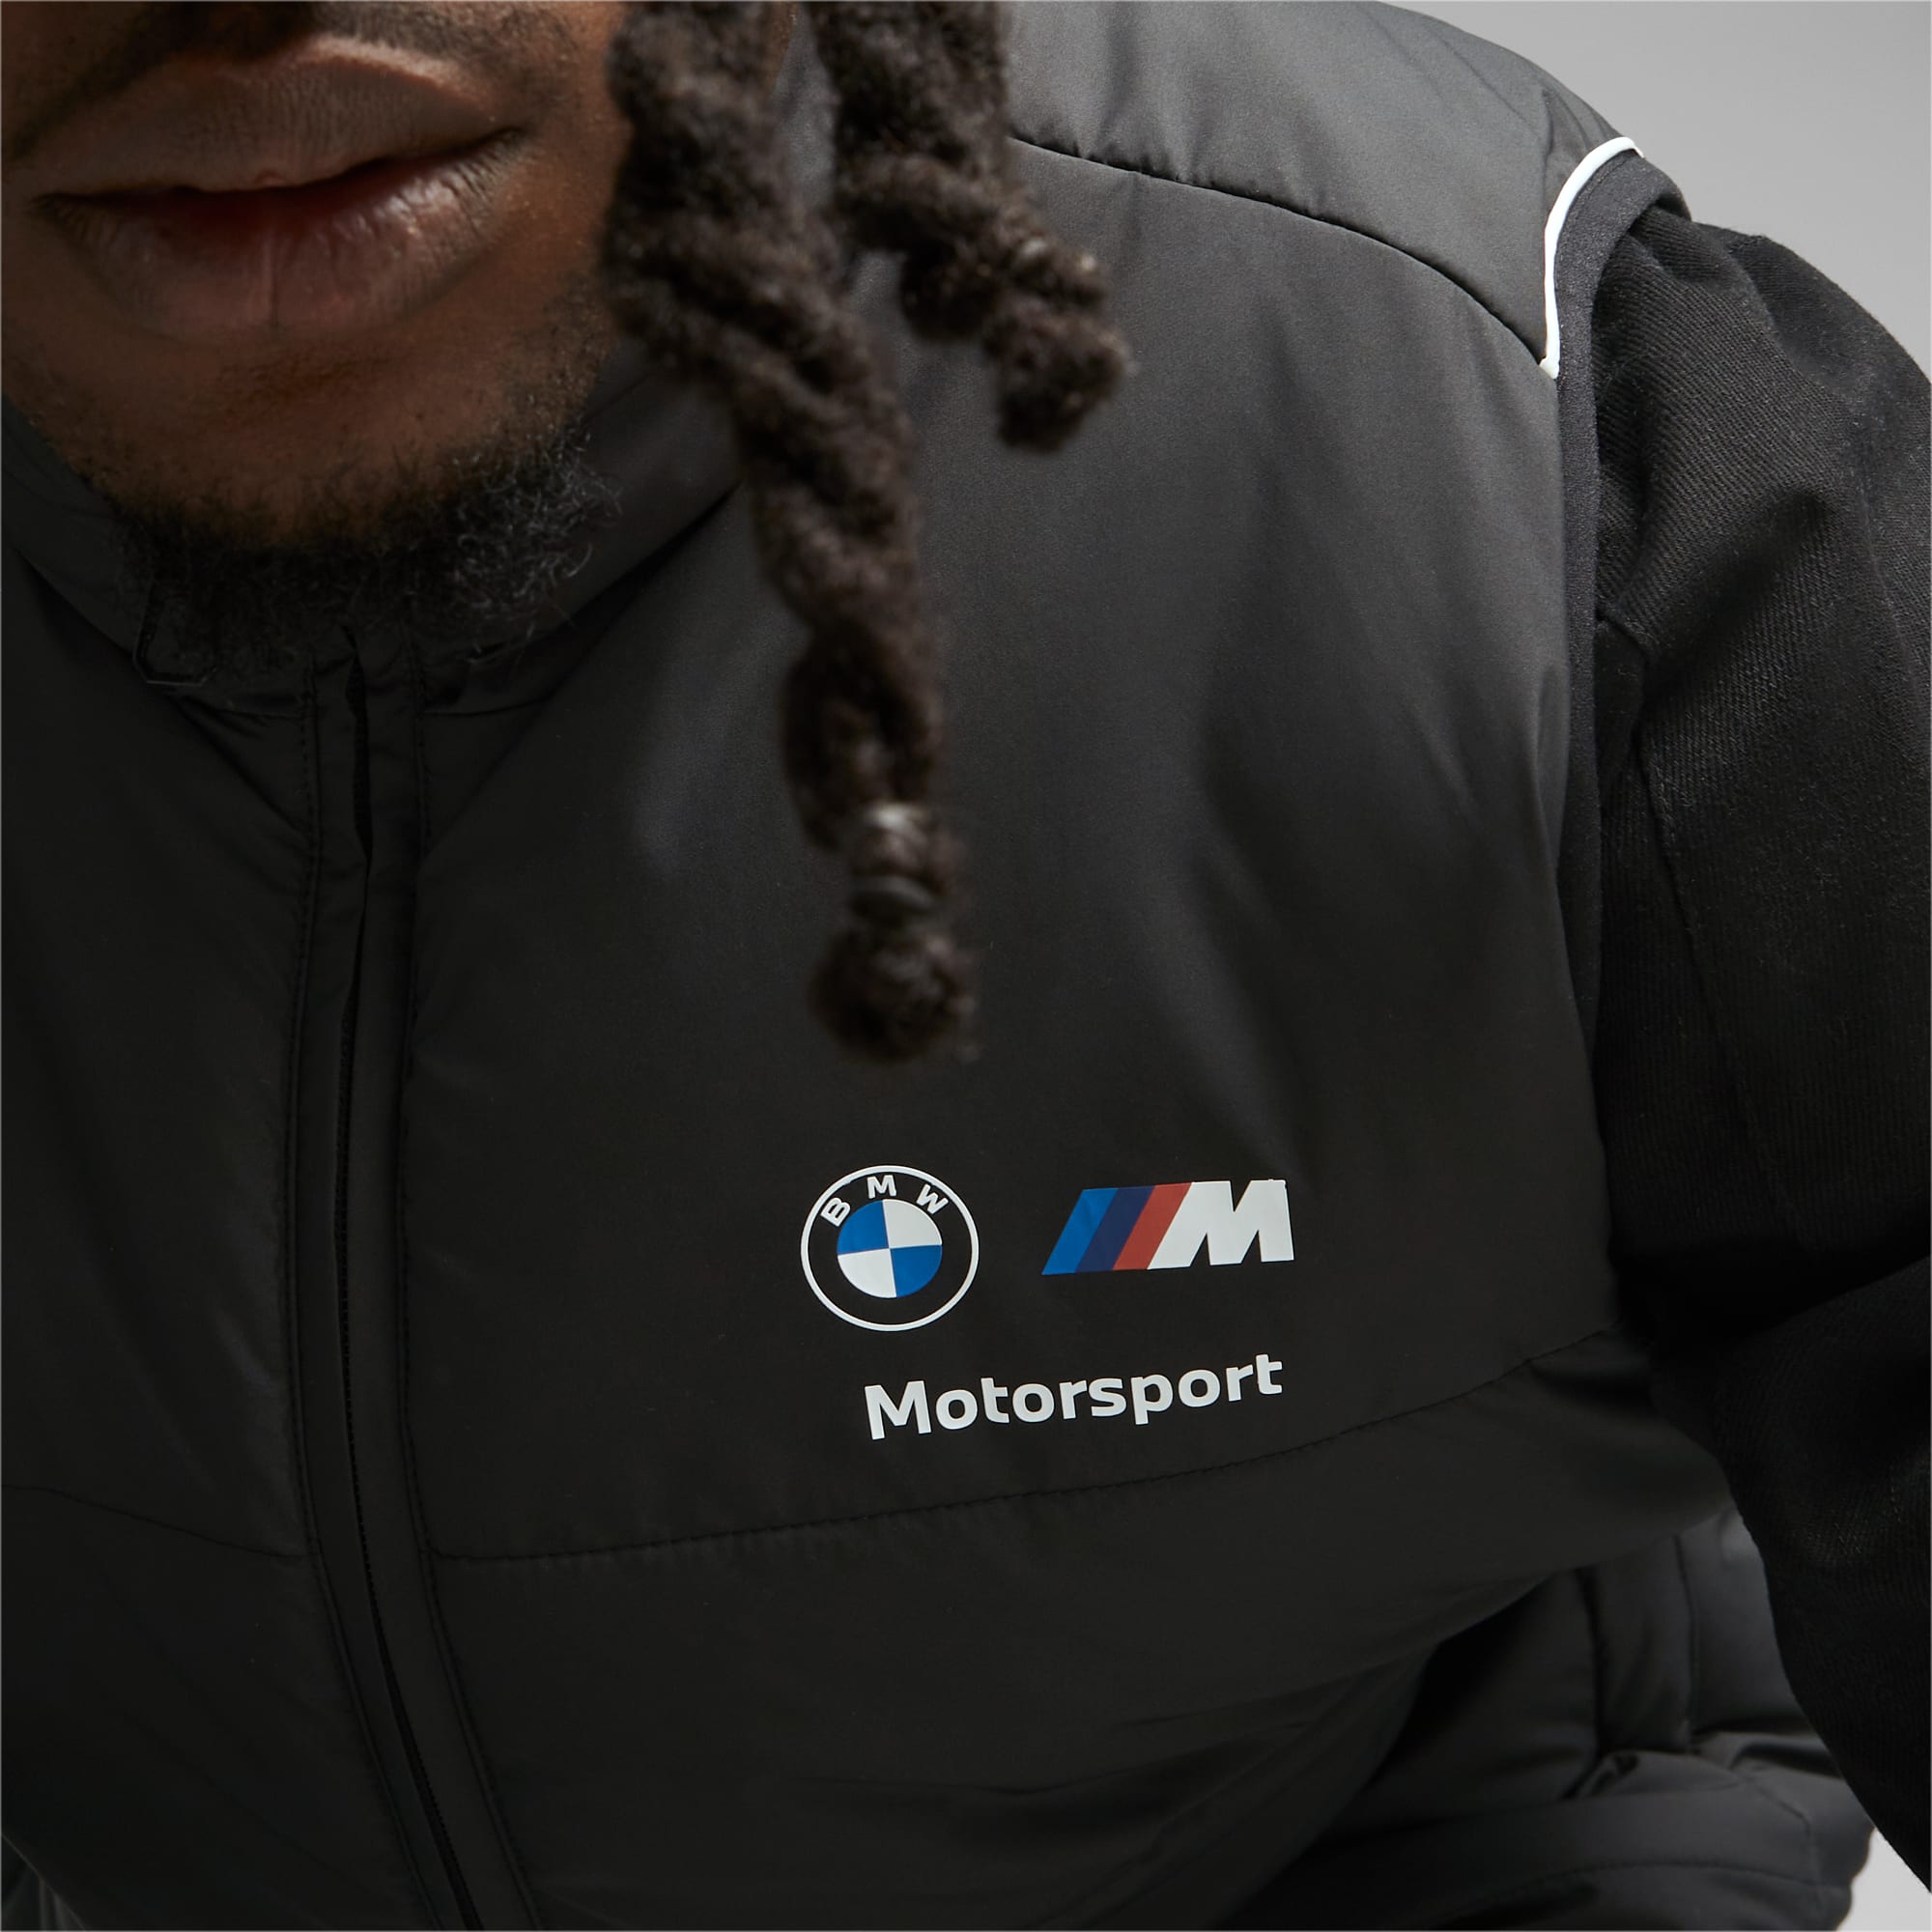 PUMA BMW M Motorsport Men's Mt7 Padded Vest Men's Jacket, Black, Size XL, Clothing